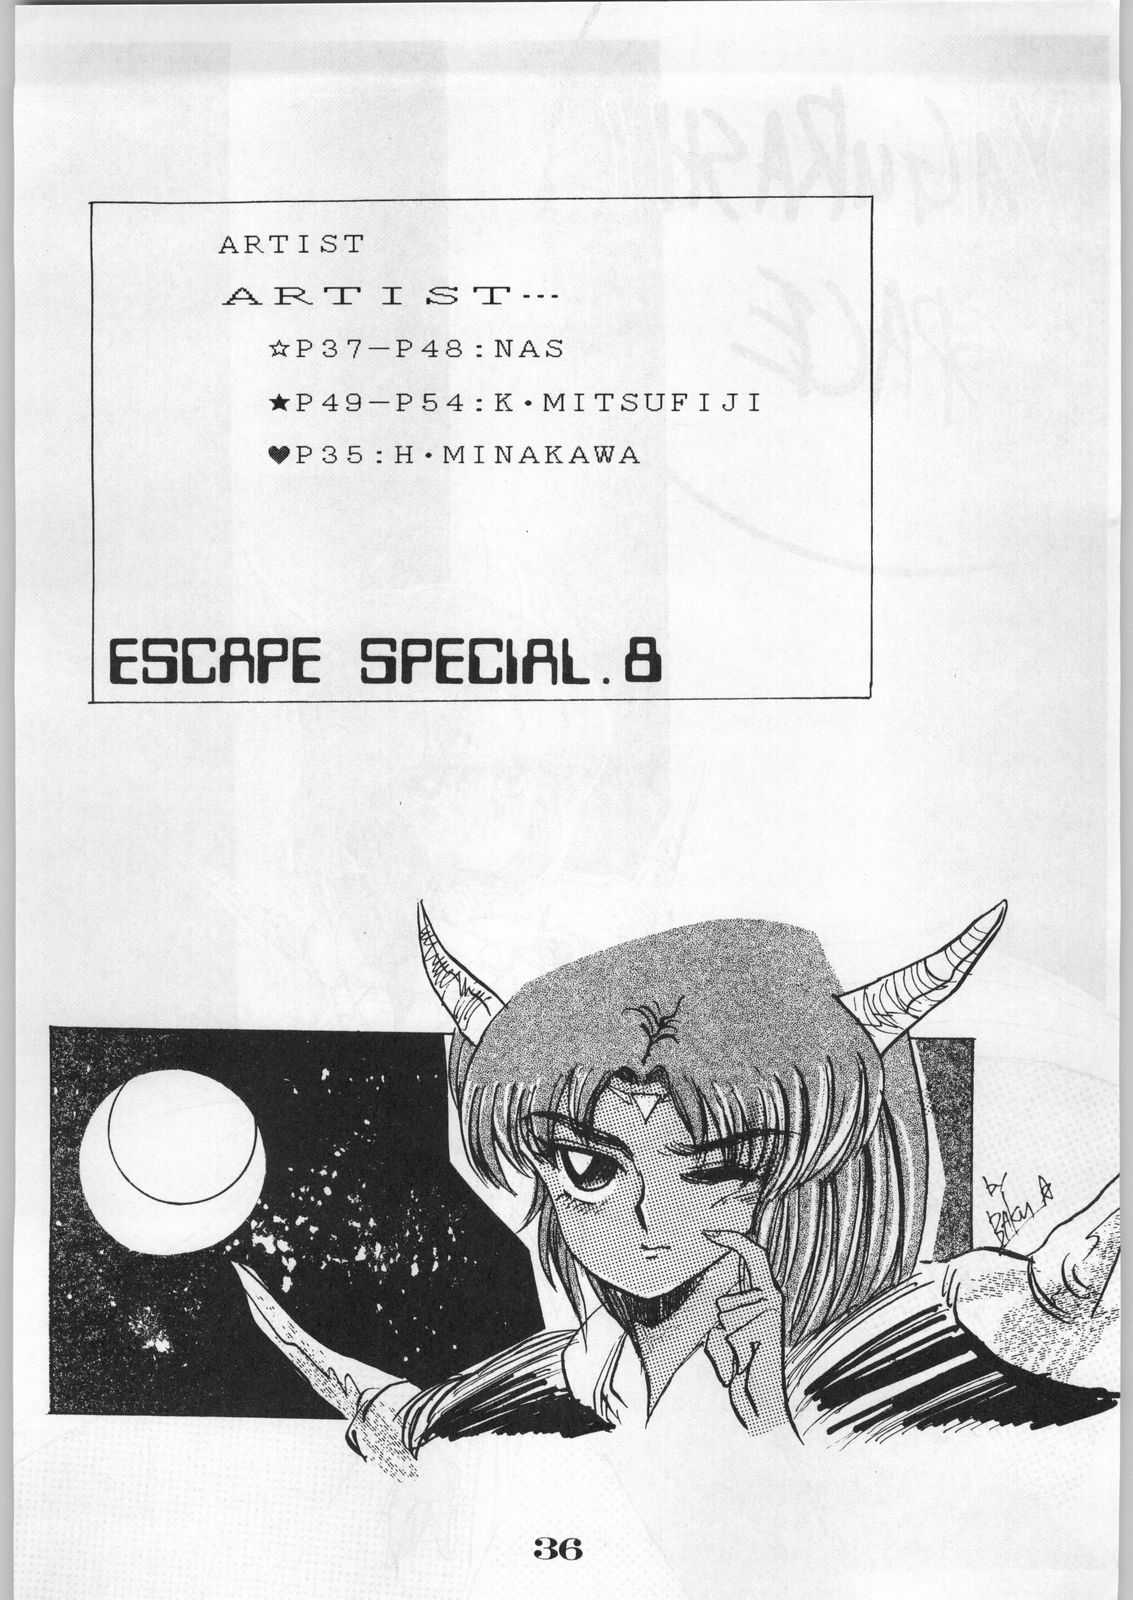 [Office Baku] Escape Special 8 - Yosoashi [オフィス・バク] ESCAPE SPECIAL 8